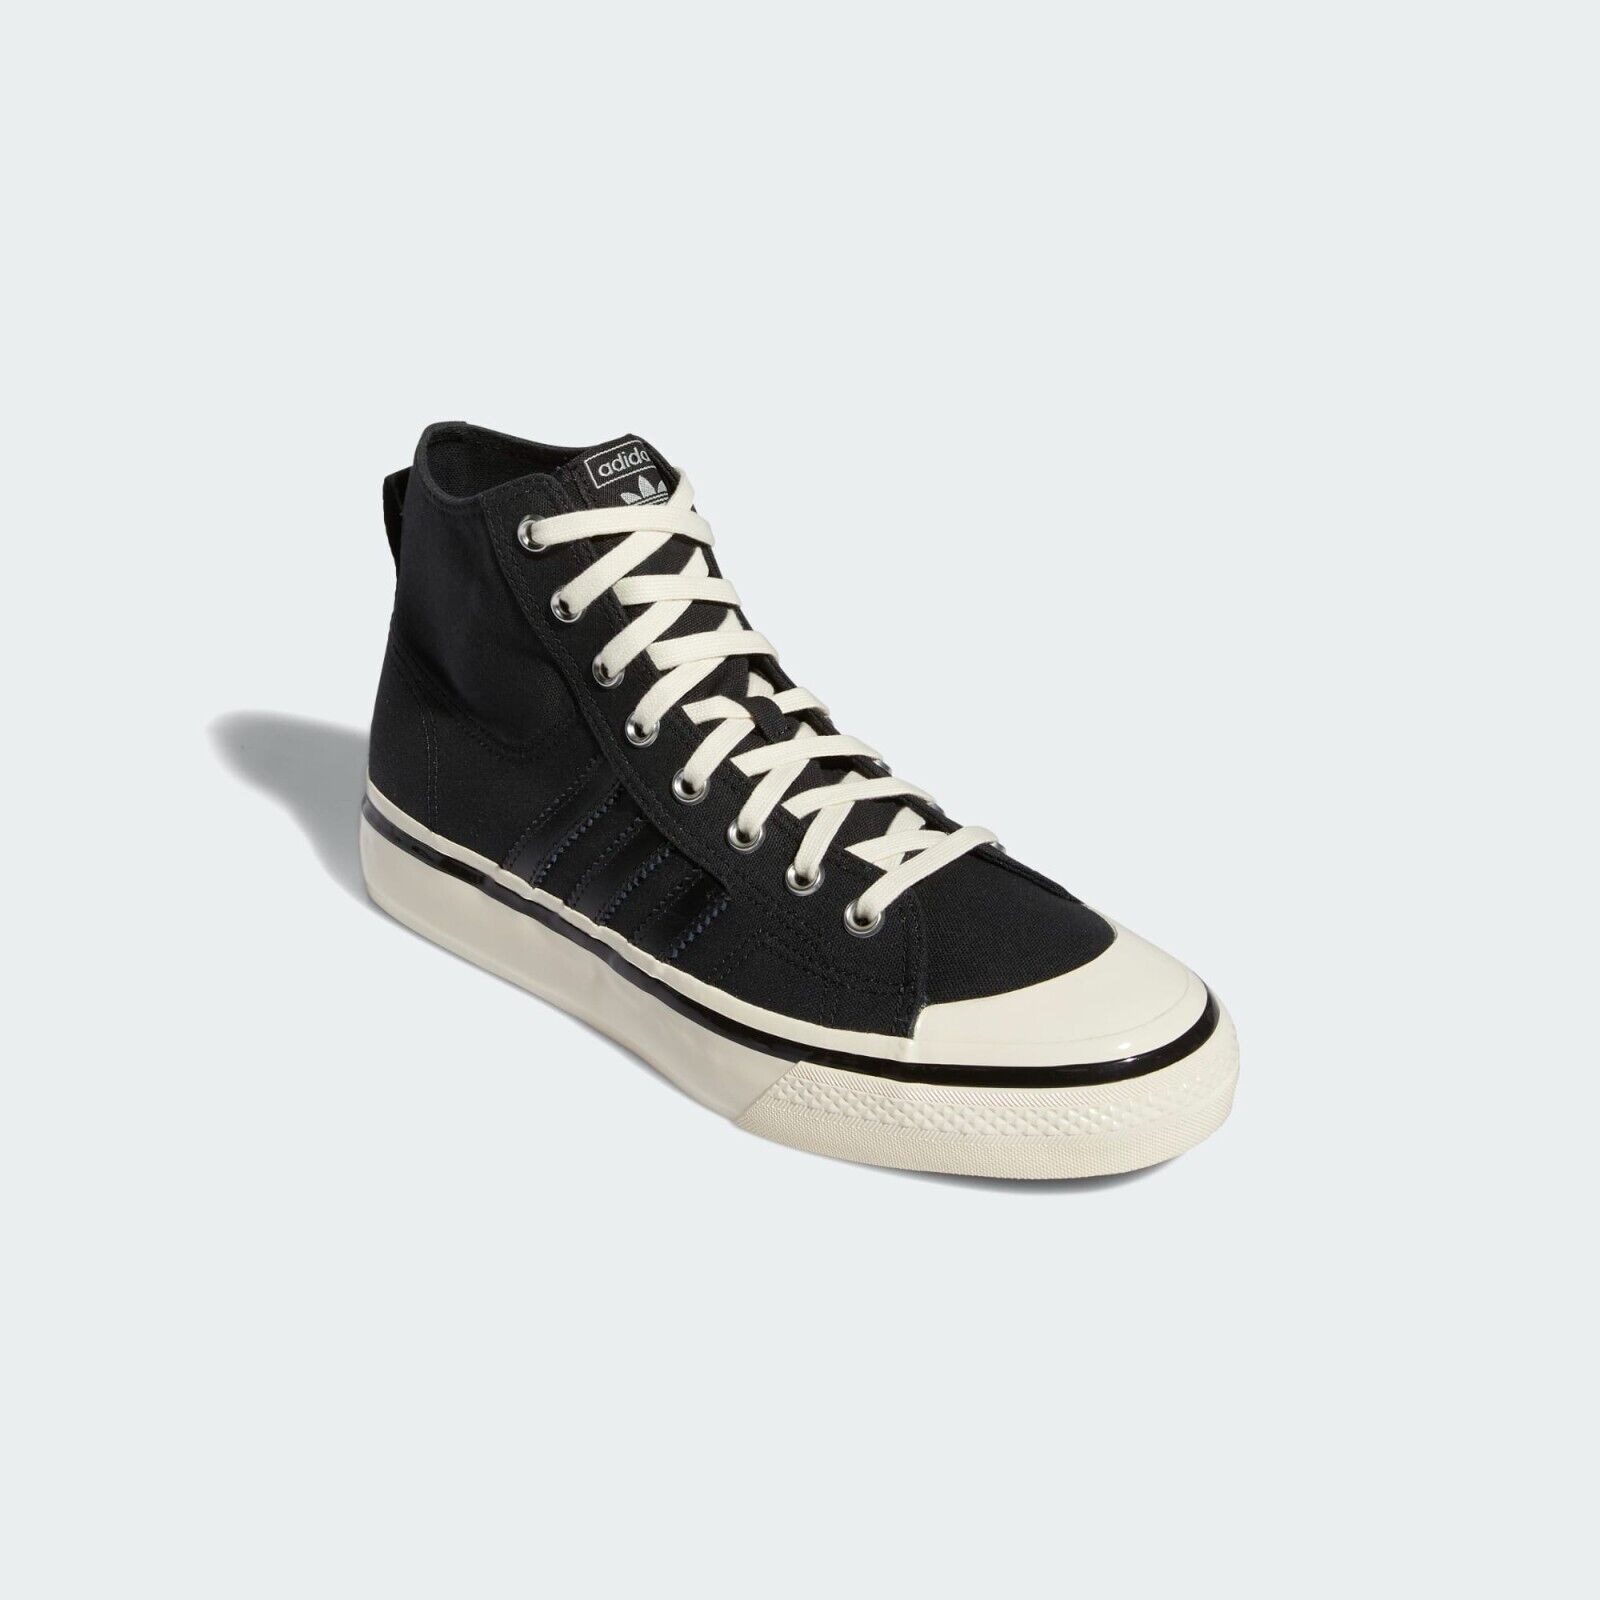 Adidas Nizza High RF 74 Shoes Originals Sneakers Core Black/White GX8488 US  7-11